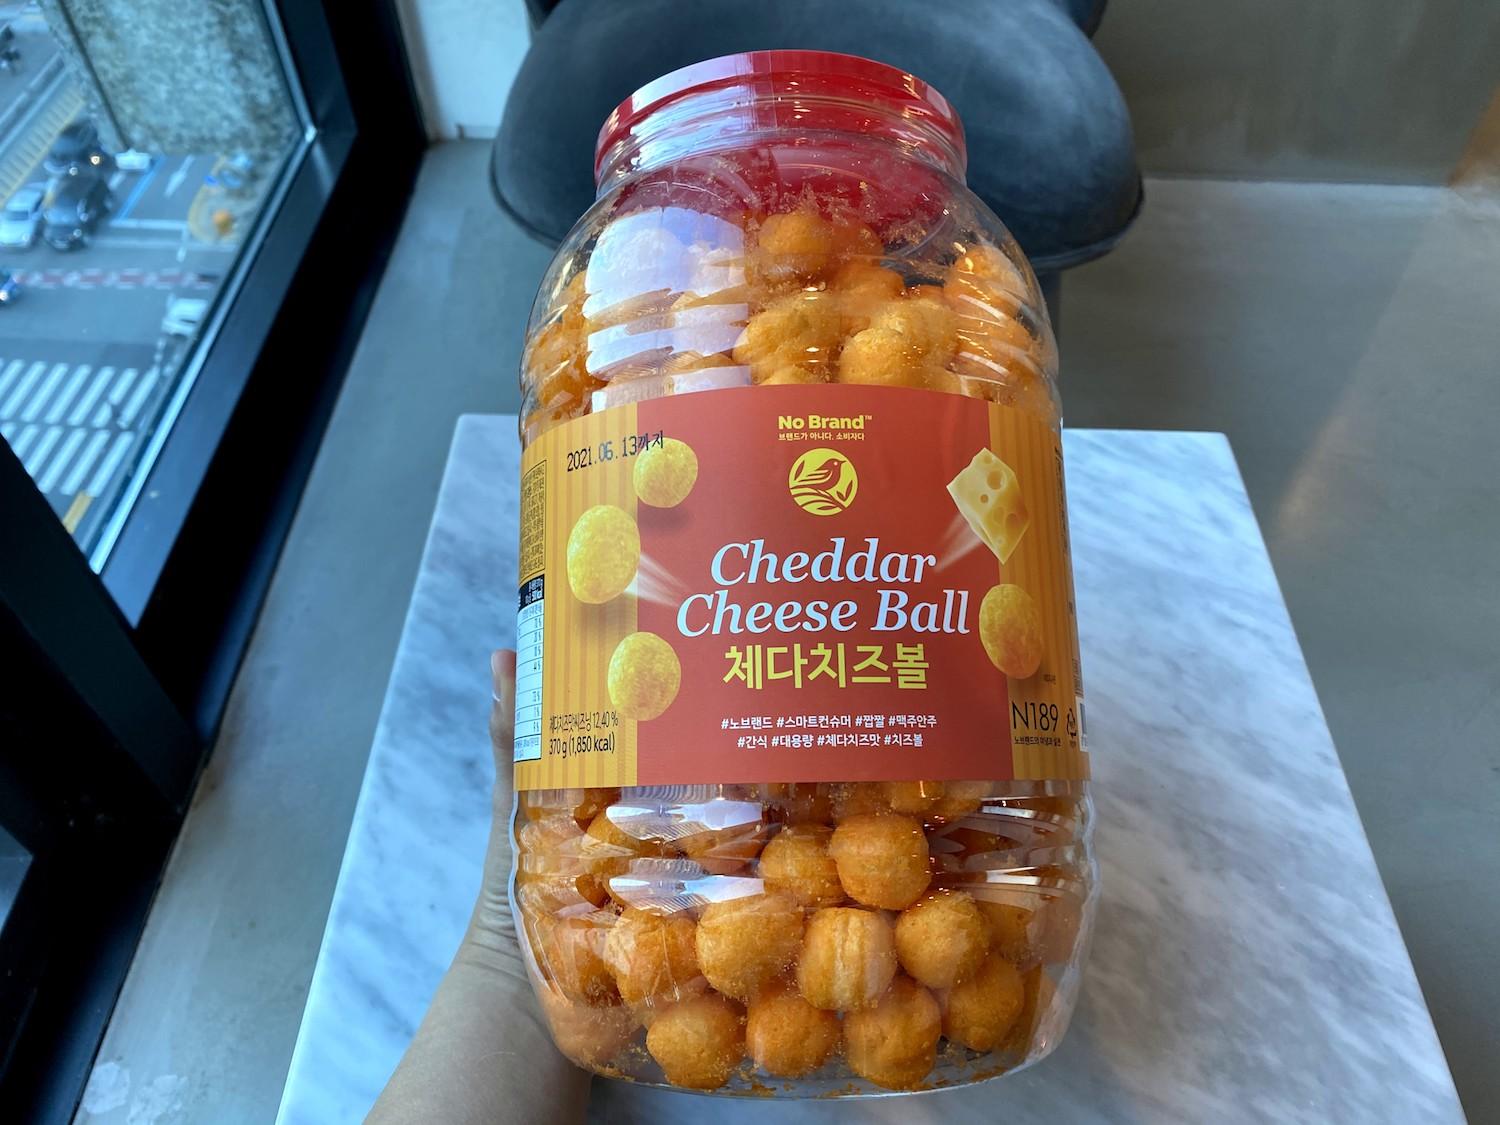 korean brand no brand's cheddar cheese ball snack